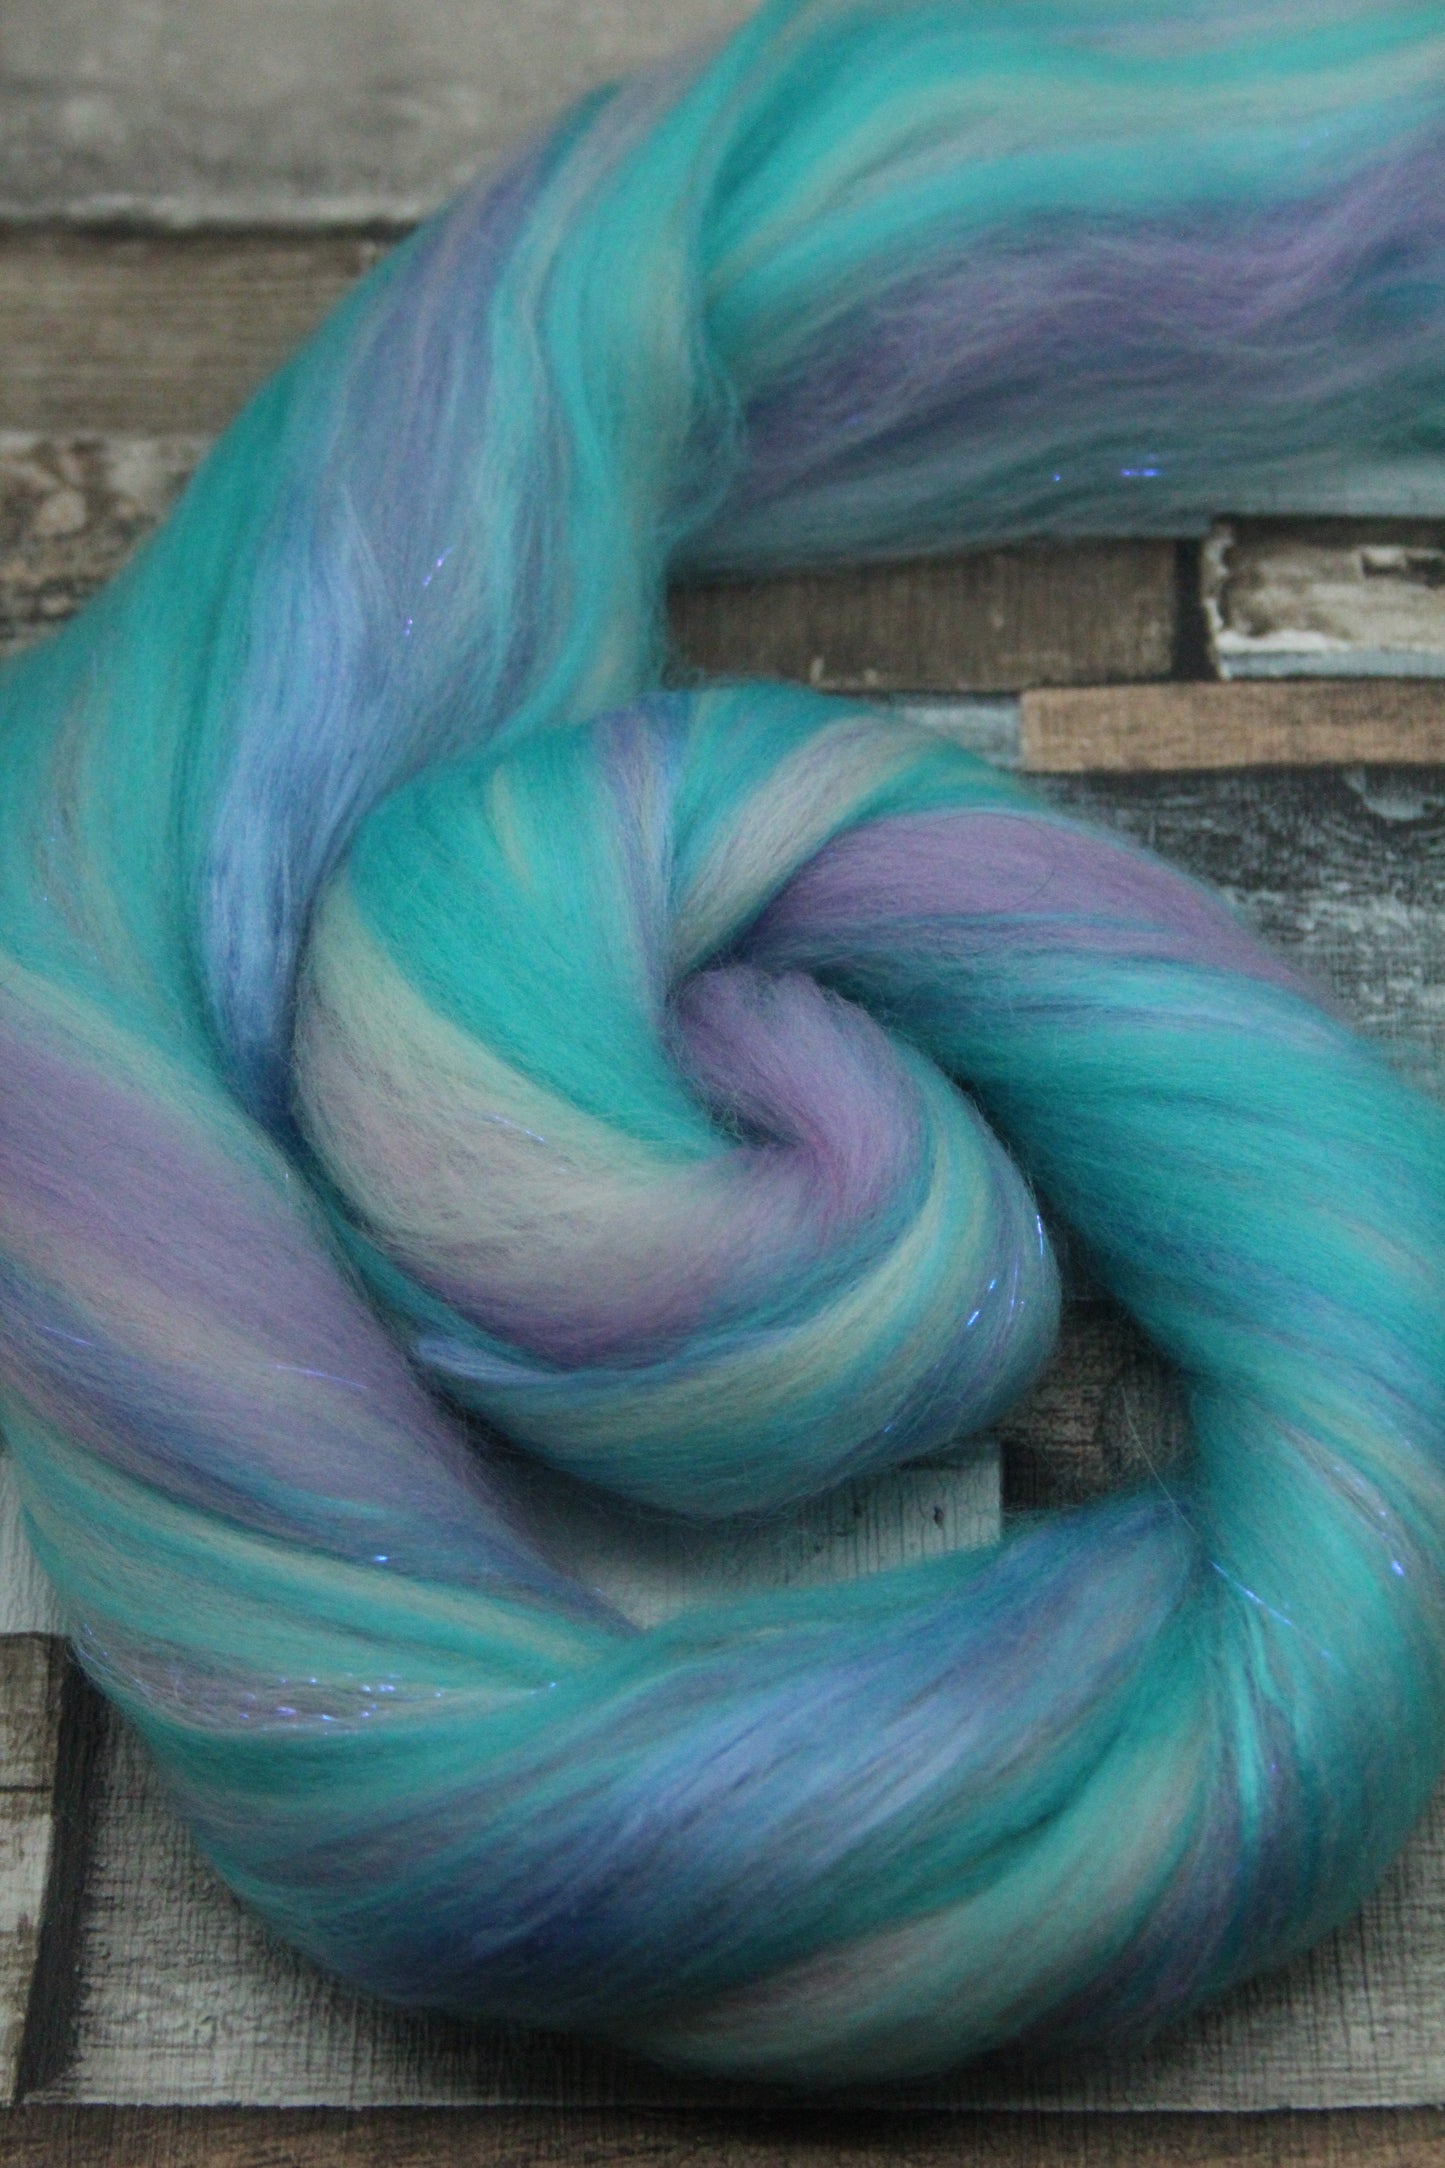 Merino Wool Blend - Purple Blue Pink - 17 grams / 0.5 oz  - Fibre for felting, weaving or spinning